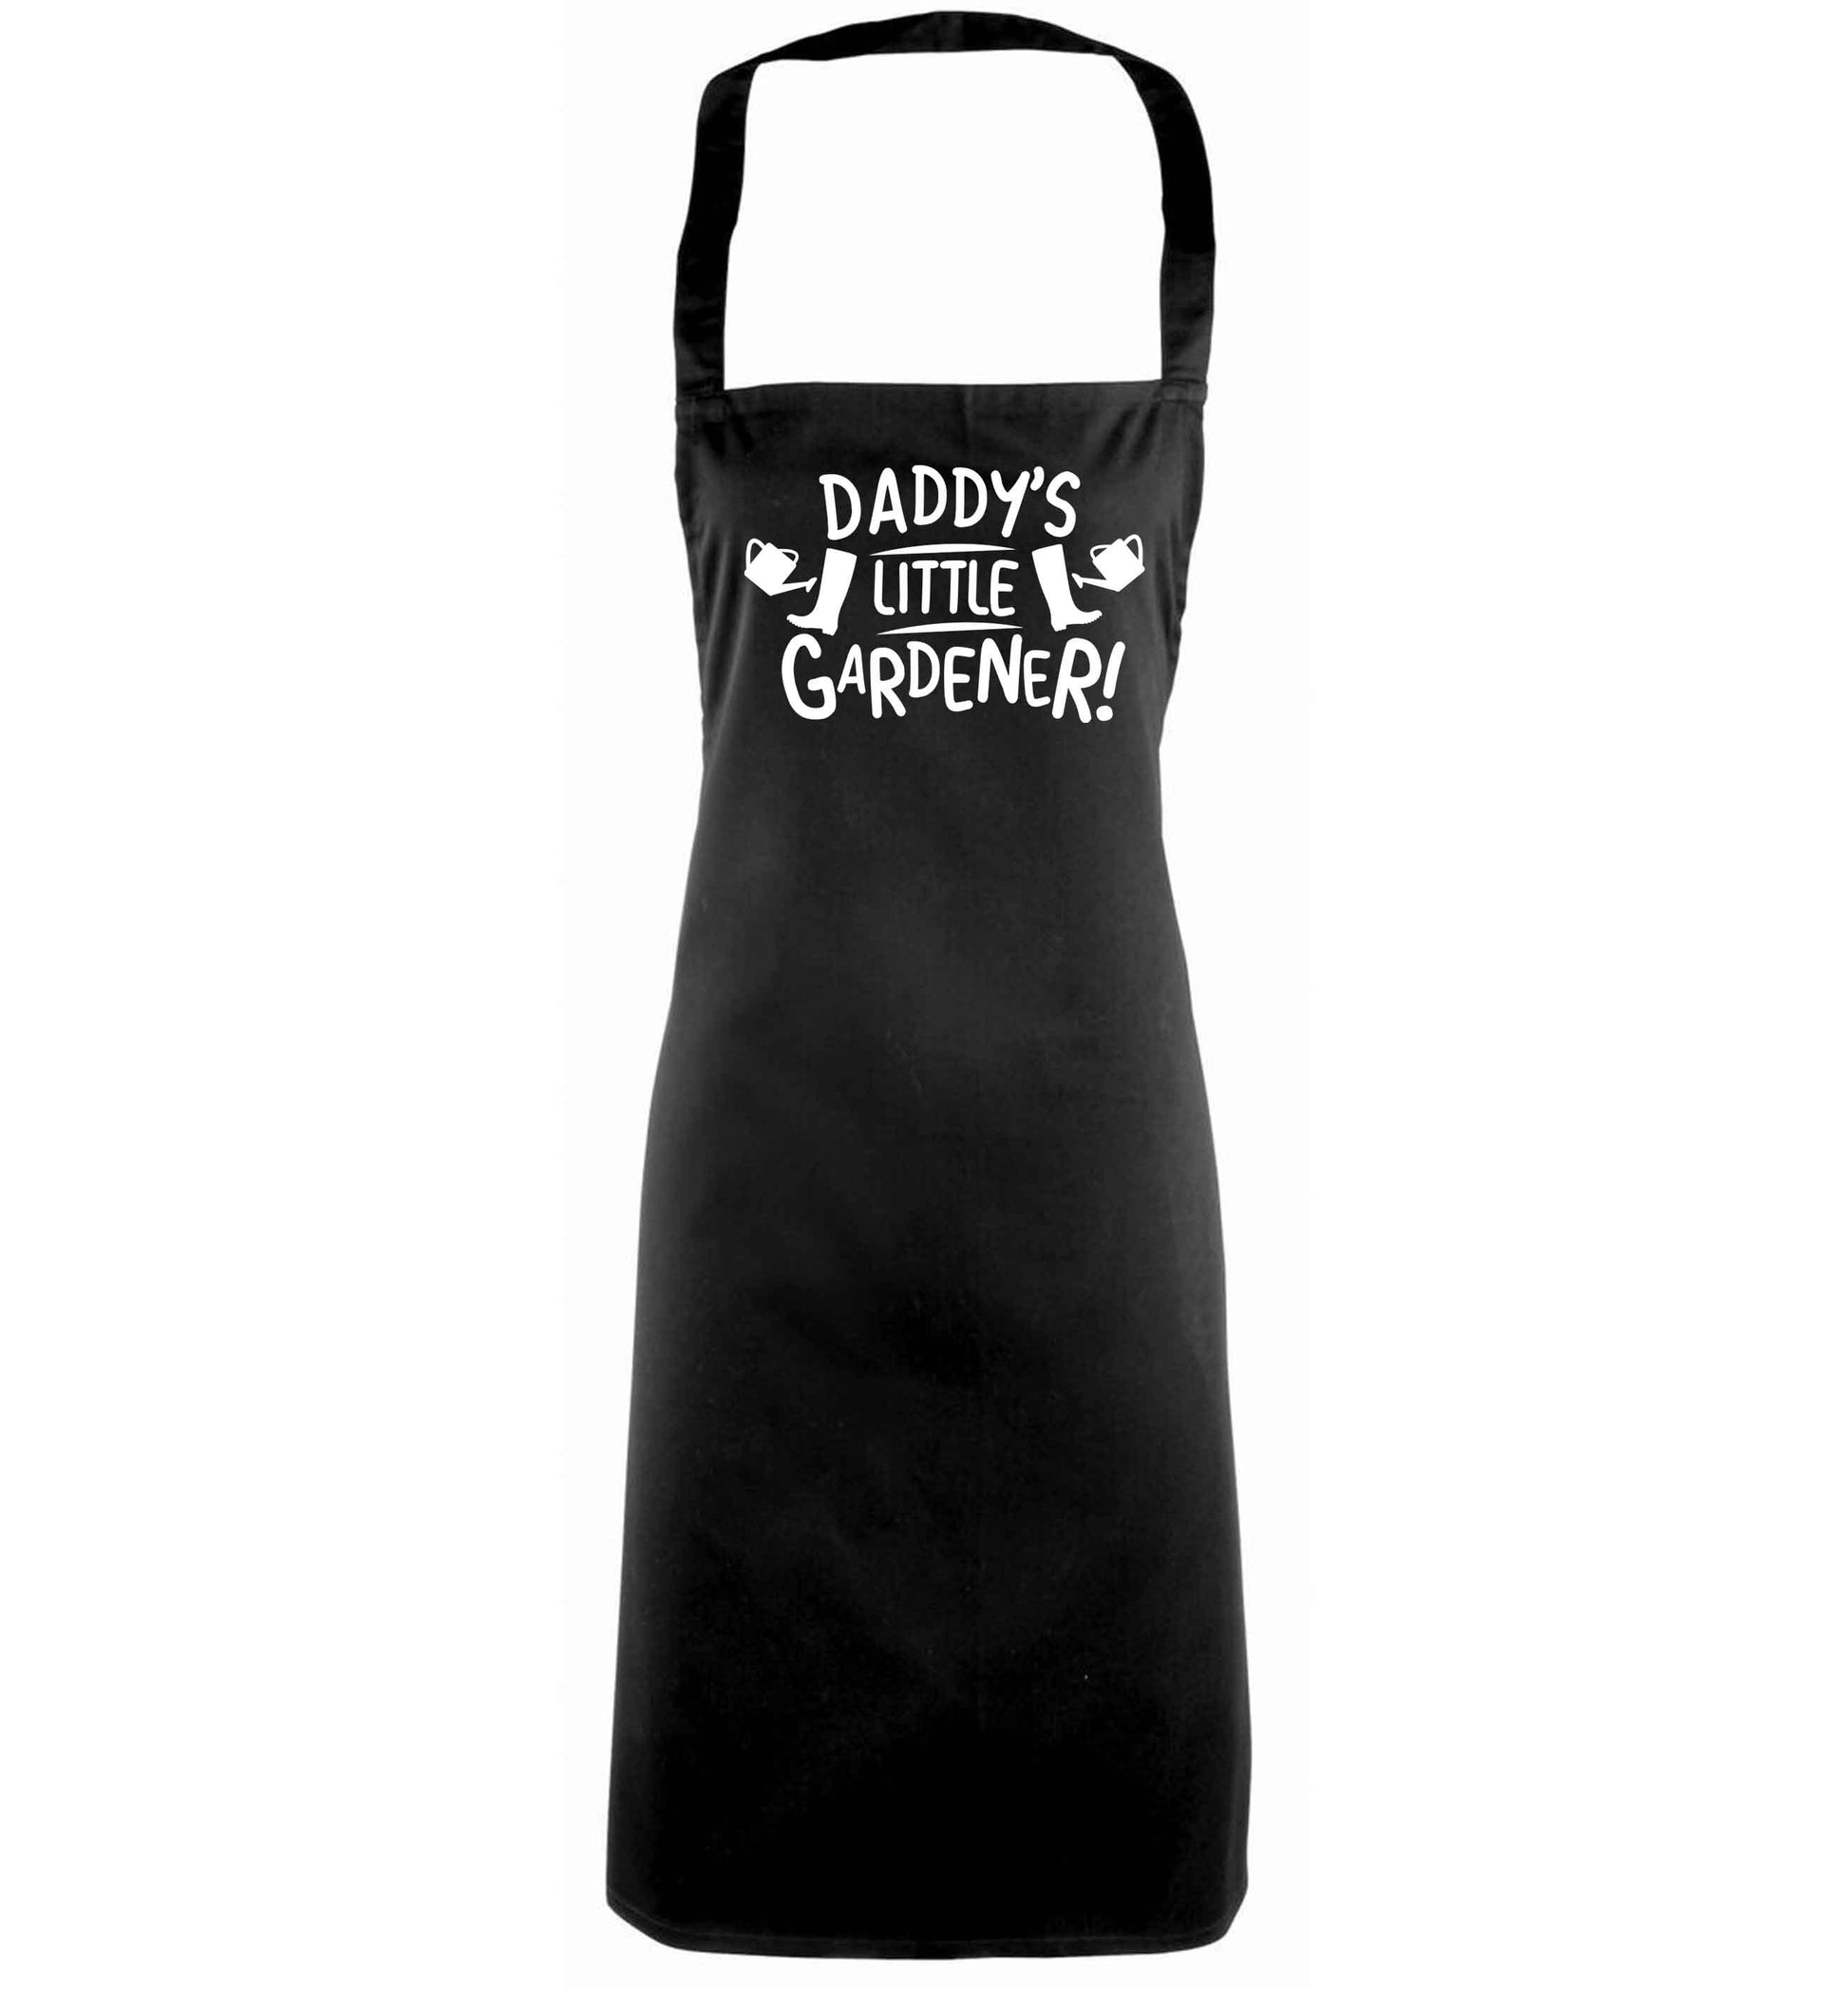 Daddy's little gardener black apron